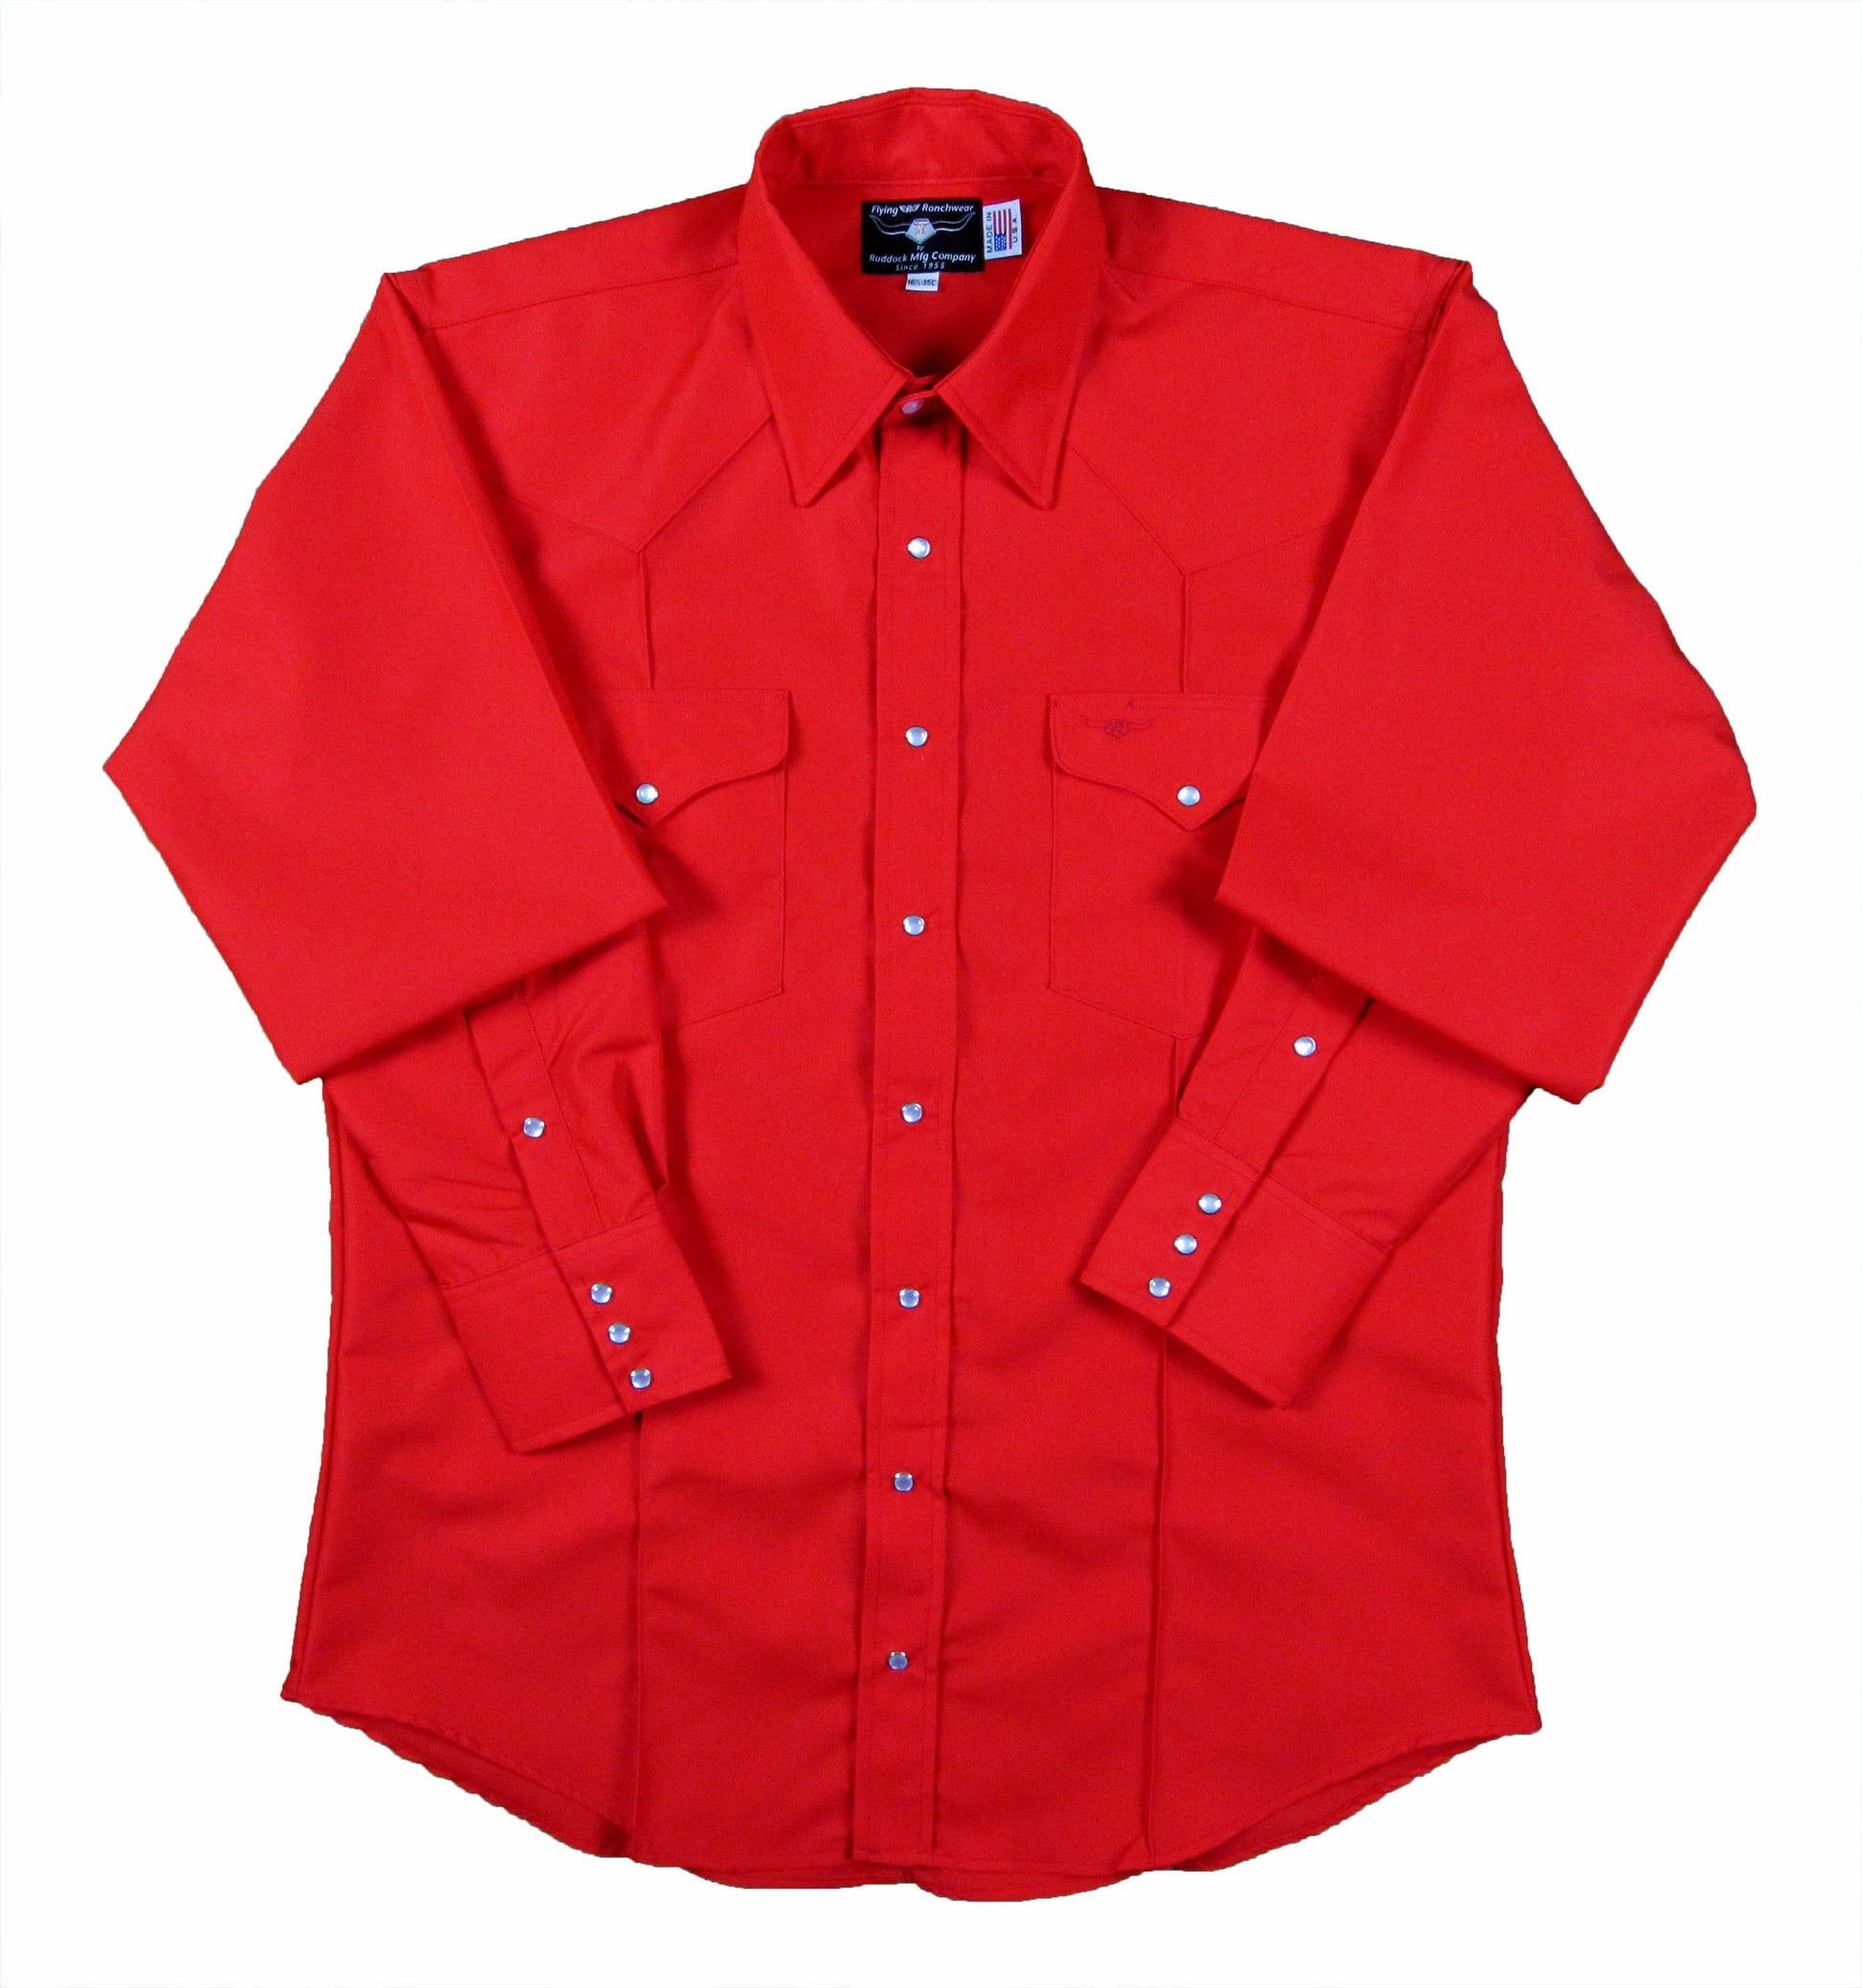 Solid Red Rancher Crease Shirt Made in USA Ruddock Shirts Big and Tall Flying R Ranchwear